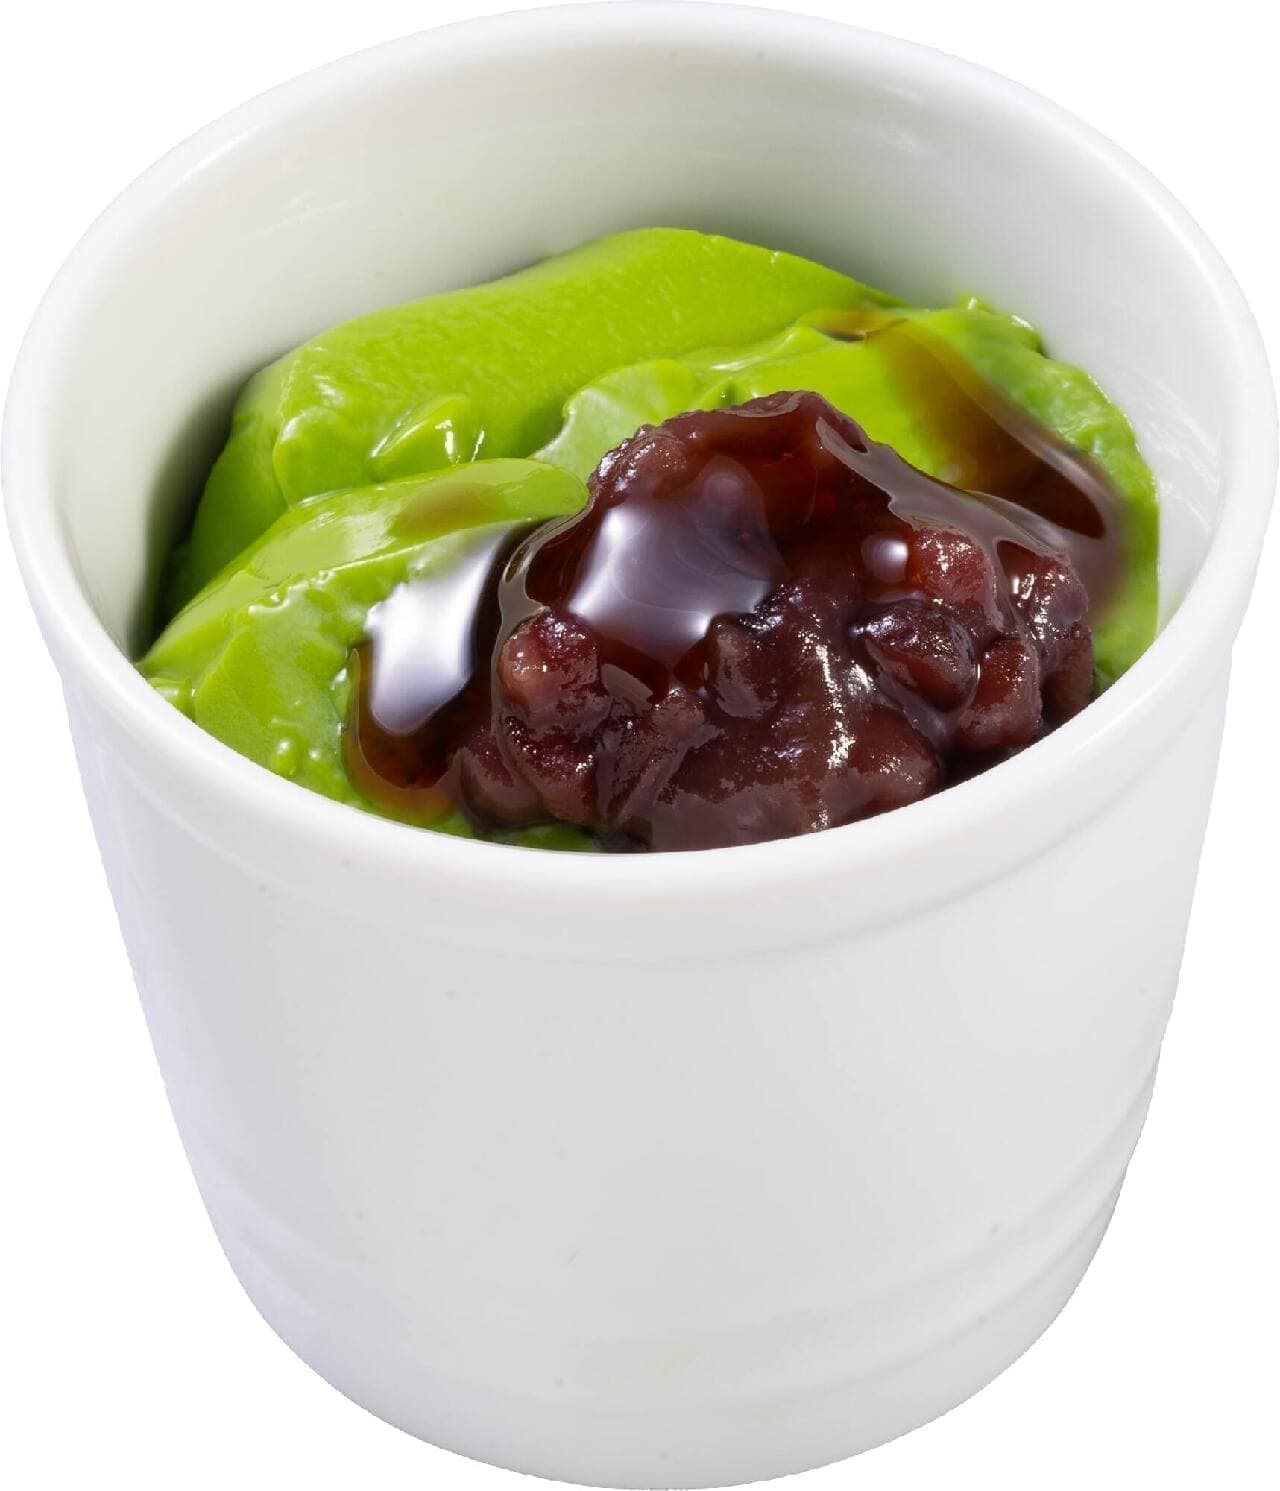 Kappa Sushi "Premium Uji Green Tea Pudding - Uji Marukyu Koyamaen Matcha Green Tea Used".